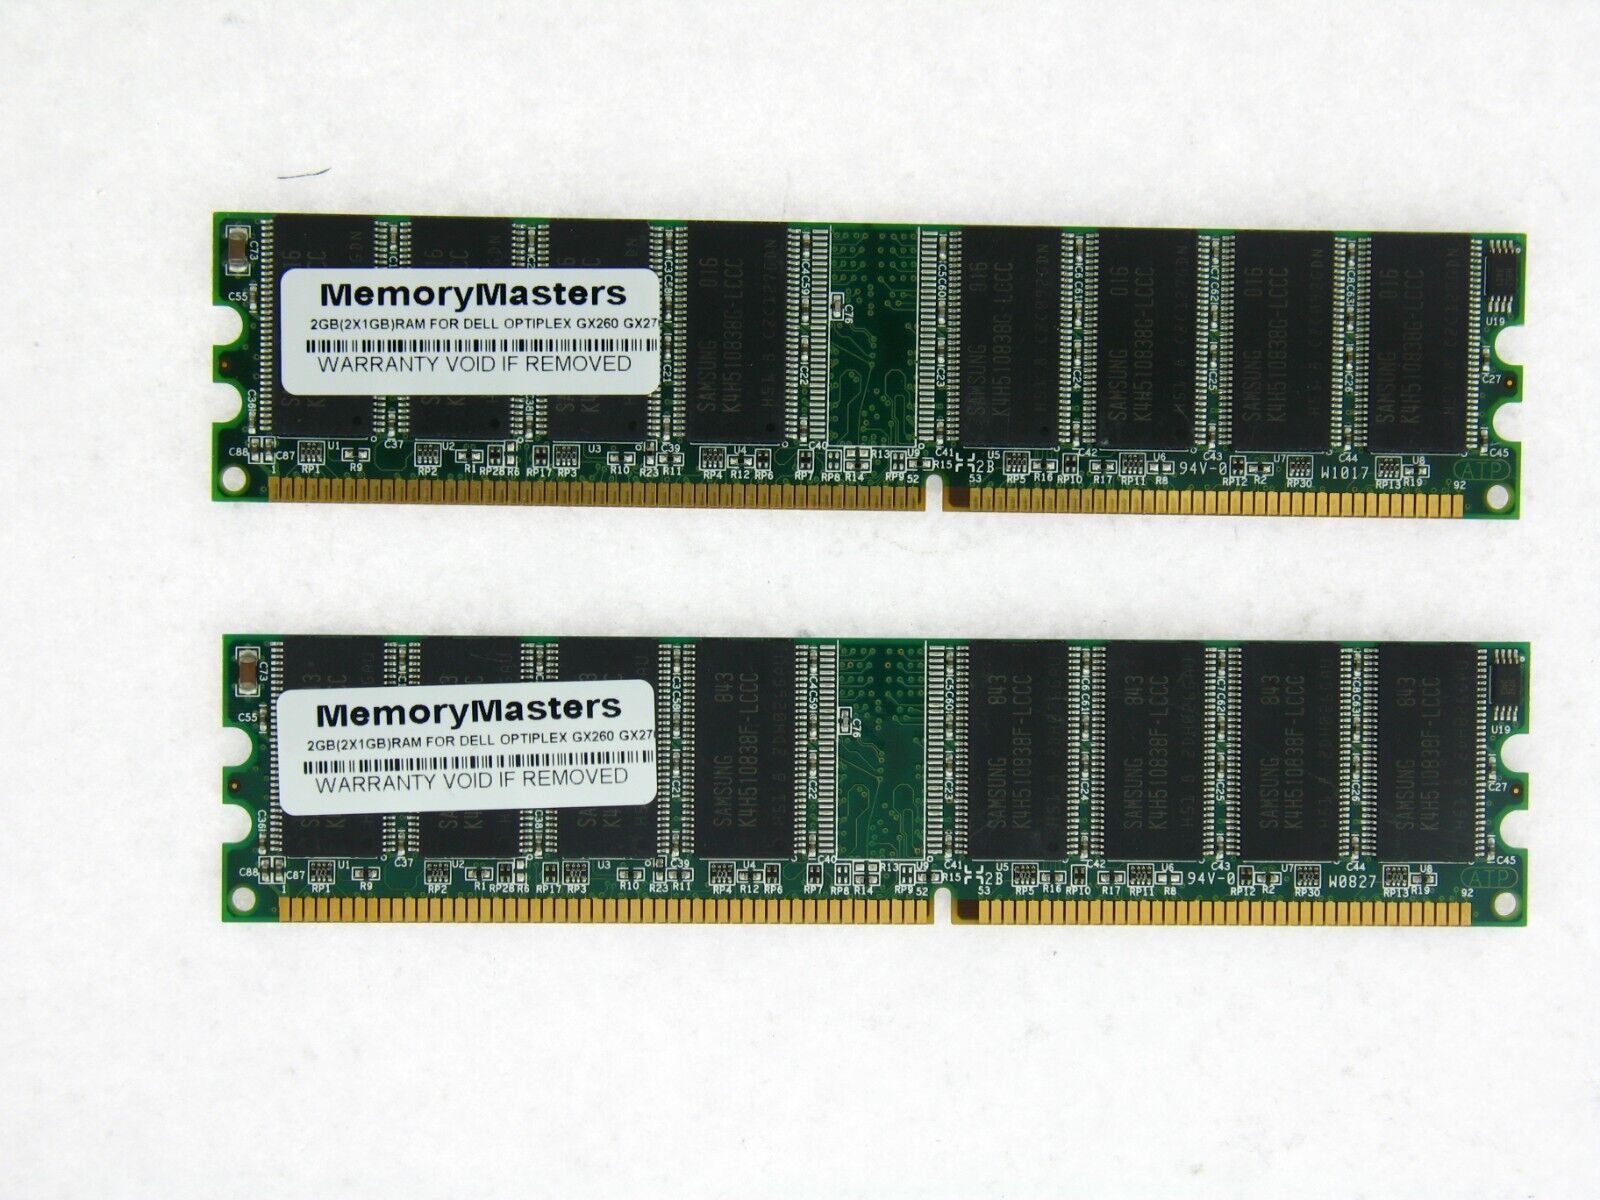 2GB PC3200 DDR Memory for Dell Optiplex GX260 GX270 SX270 2x1GB Mem Mod TESTED